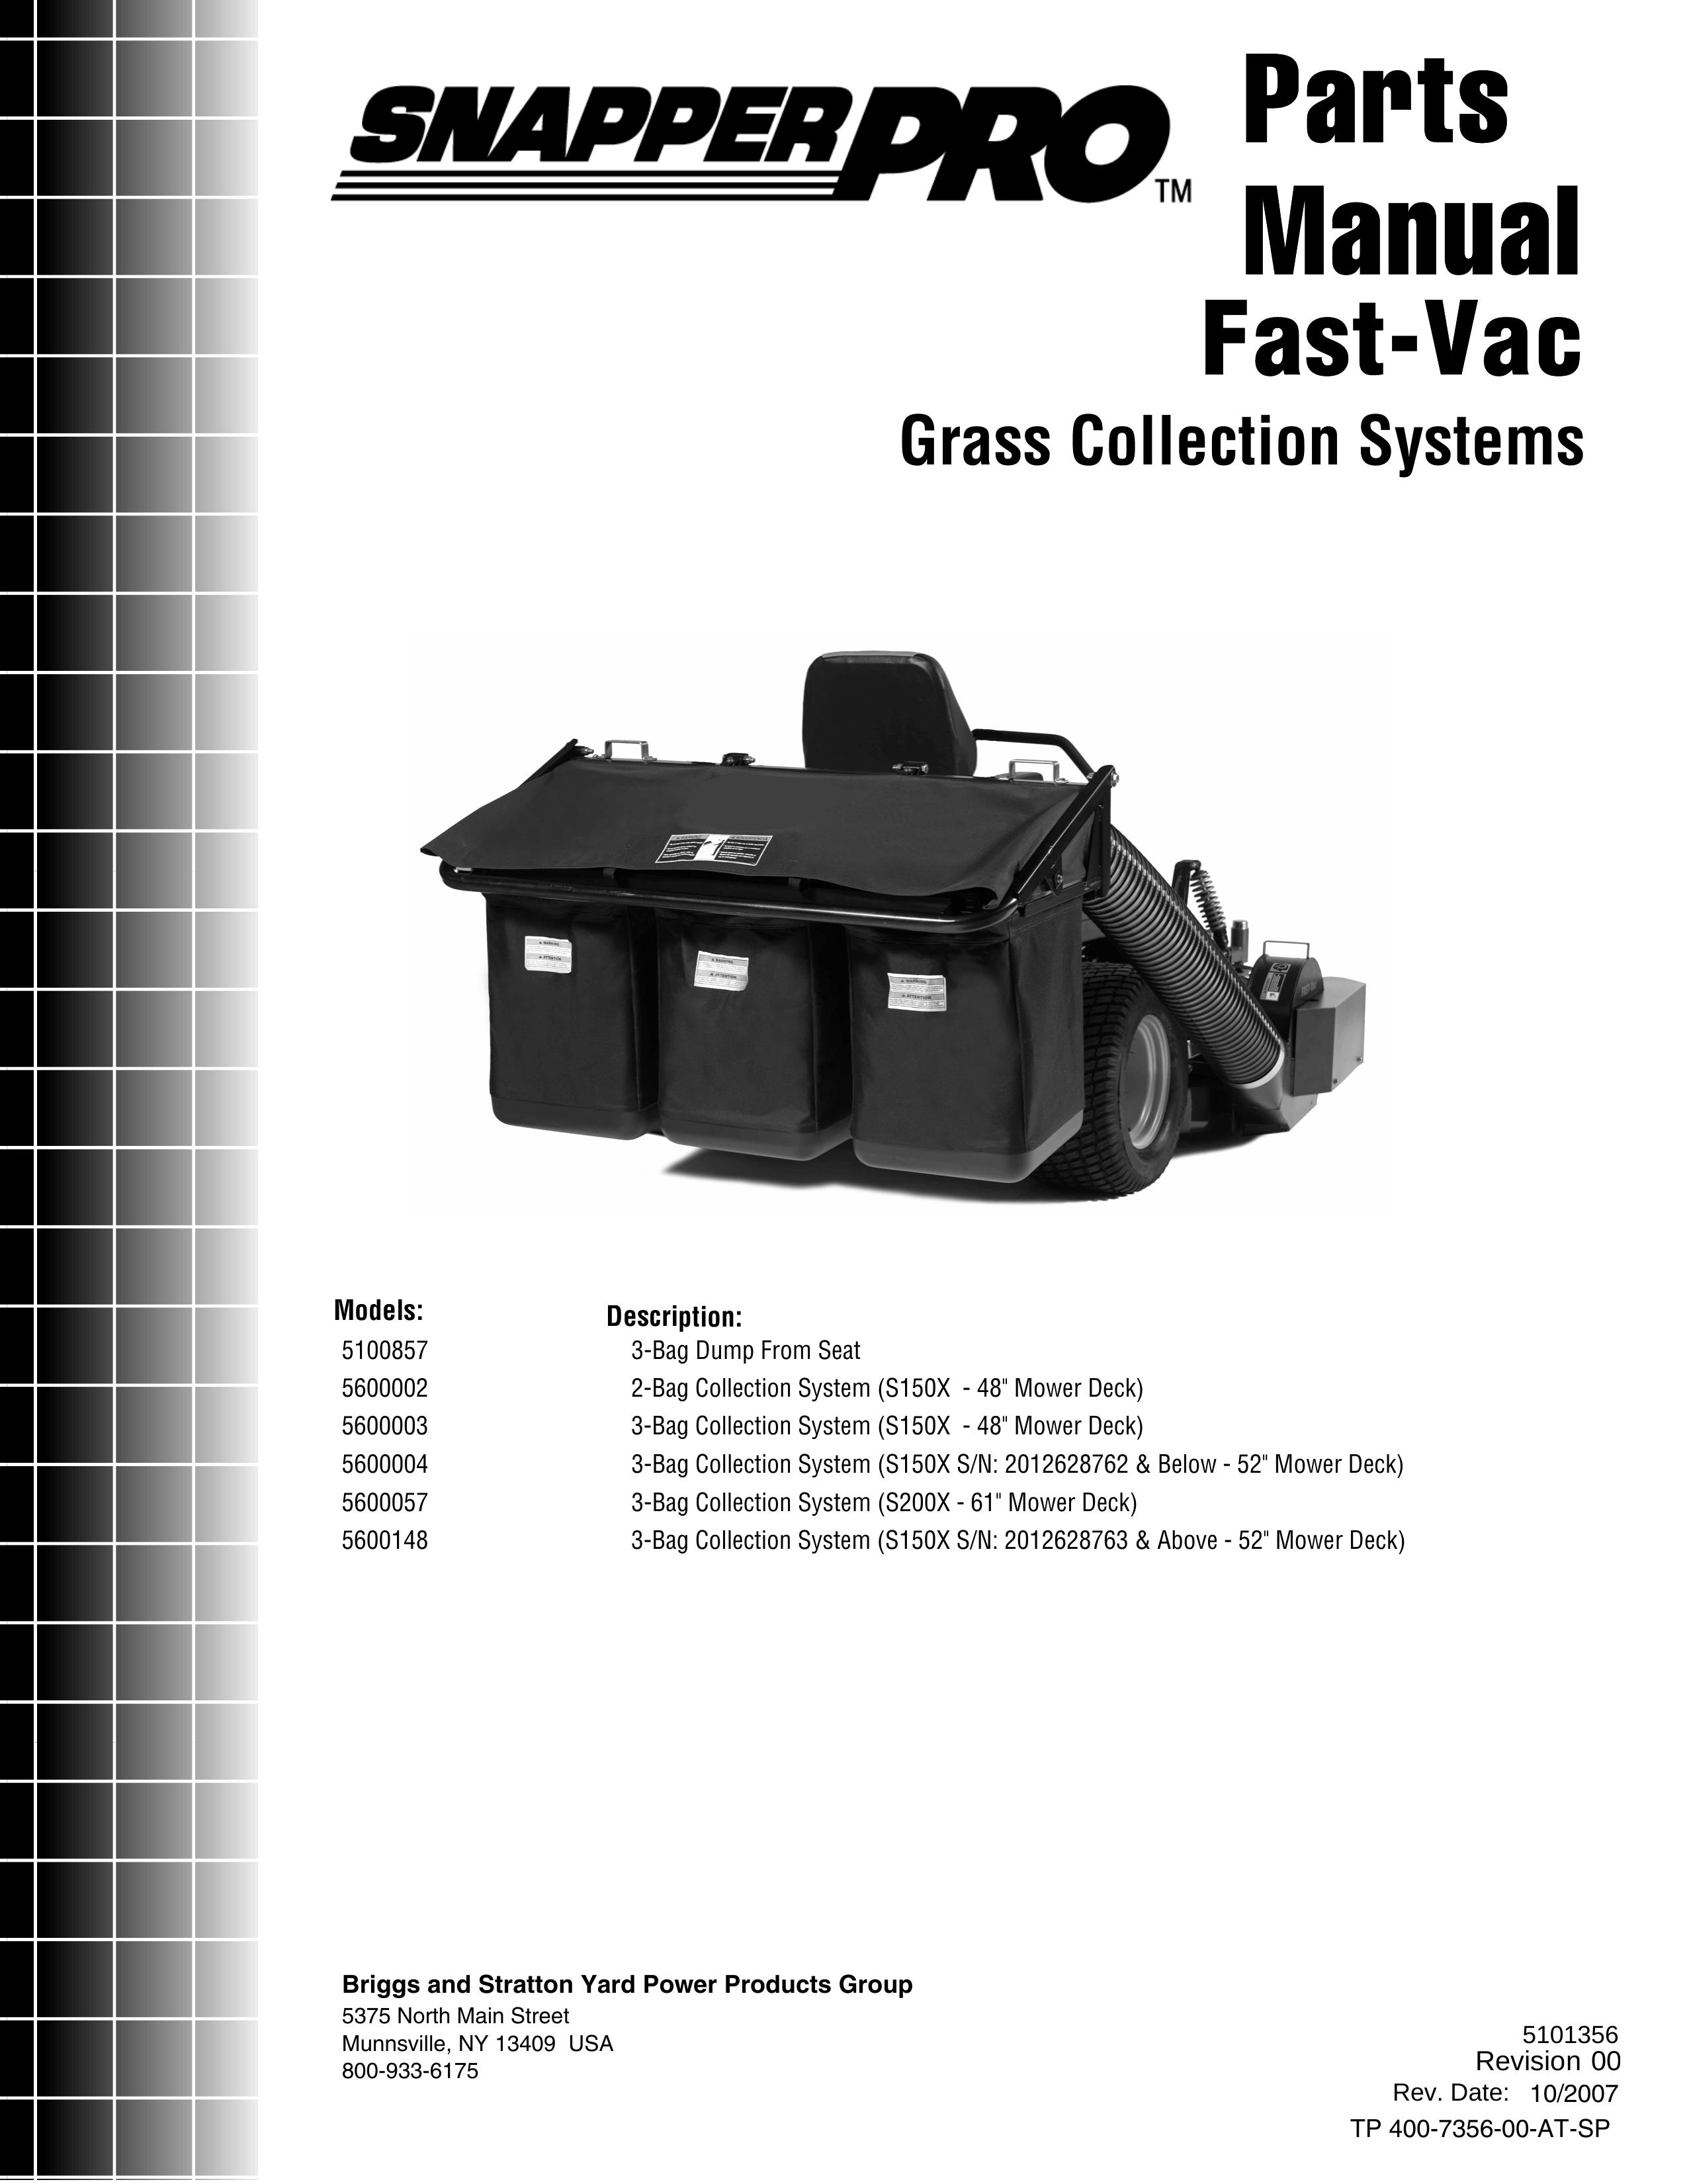 Snapper 5600148 Lawn Mower Accessory User Manual